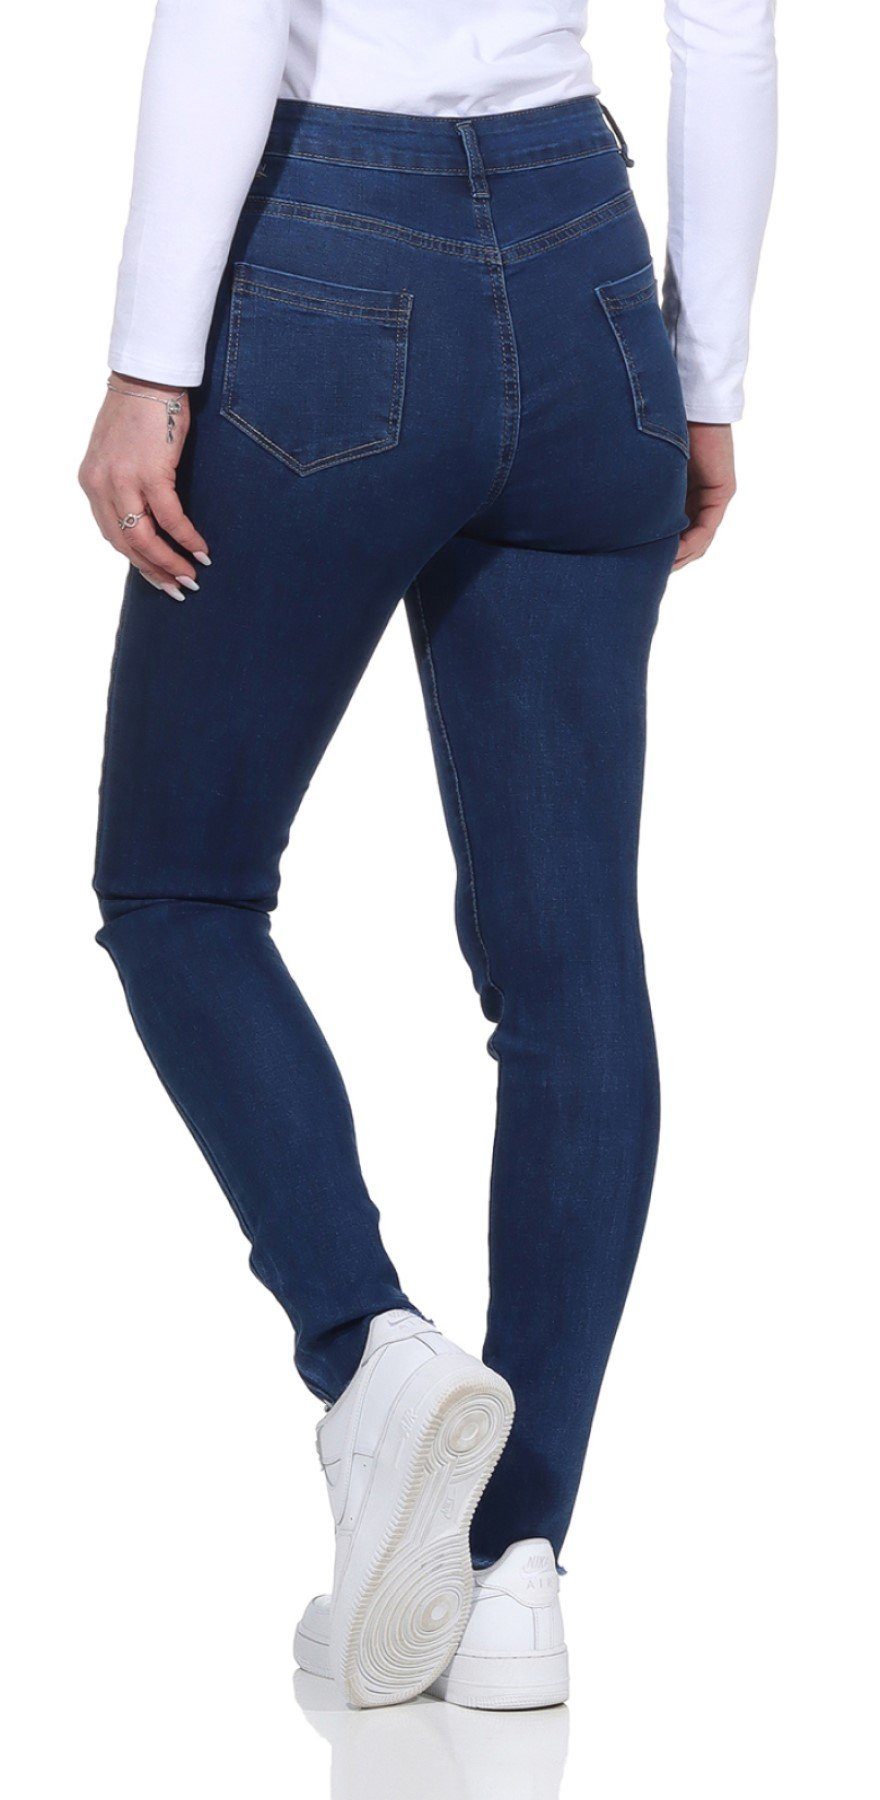 moderner Dunkelblau Distressed Look für Damen Look Stretch Jeanshosen Aurela 5-Pocket-Jeans Jeans Destroyed Damenmode